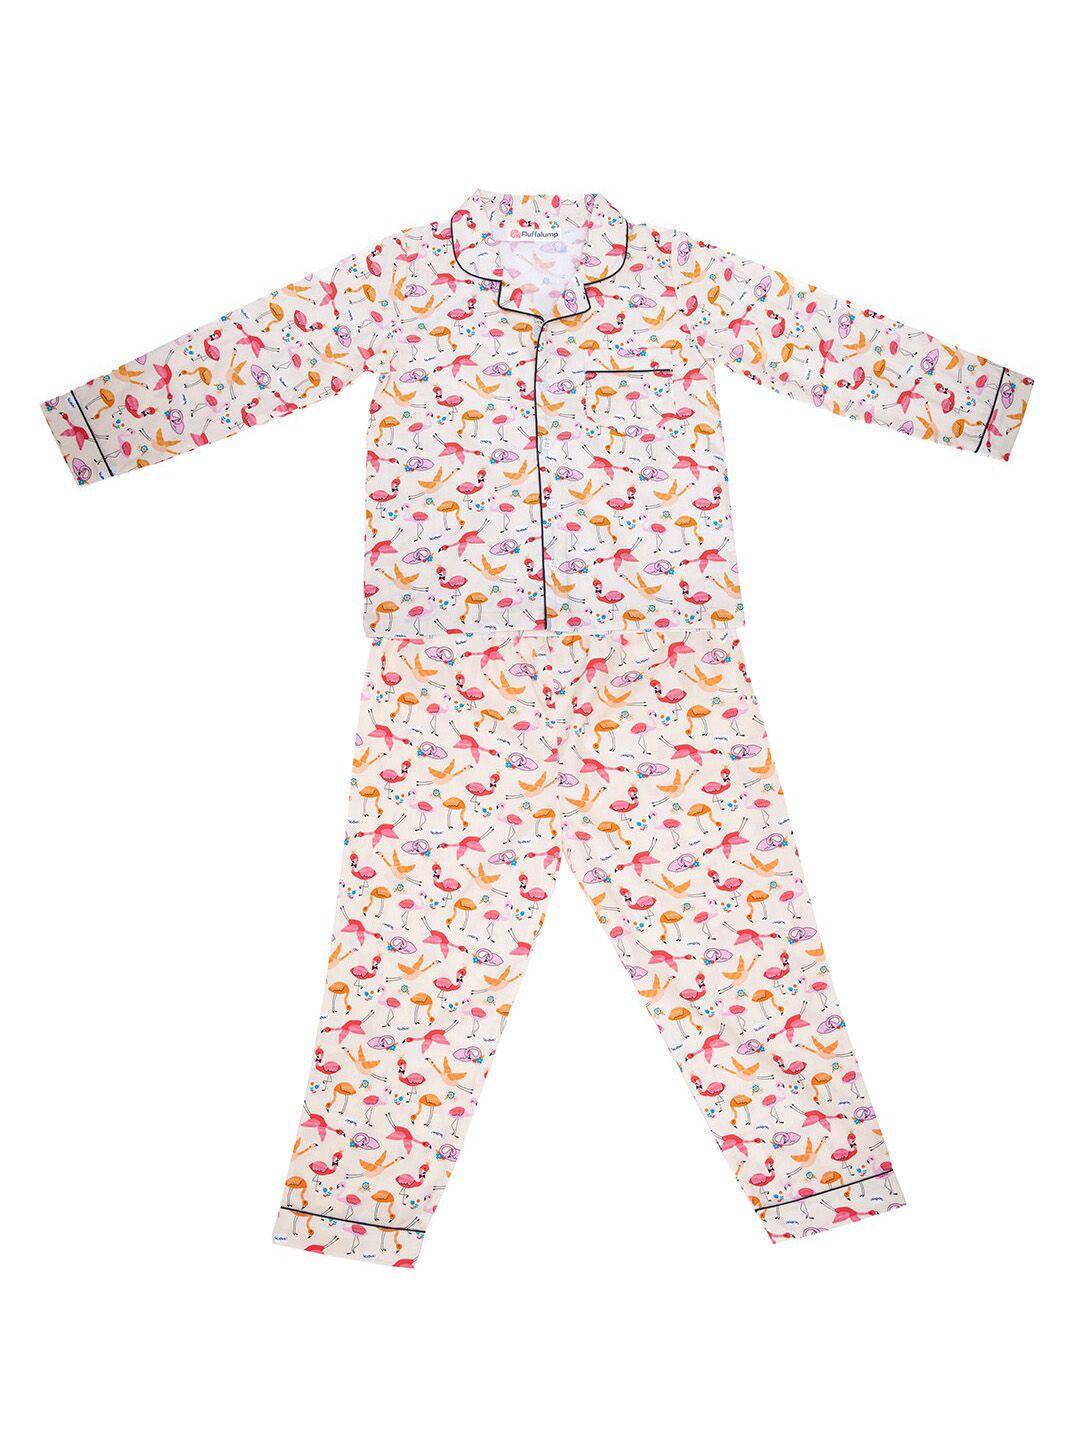 fluffalump unisex kids conversational printed pure cotton night suit